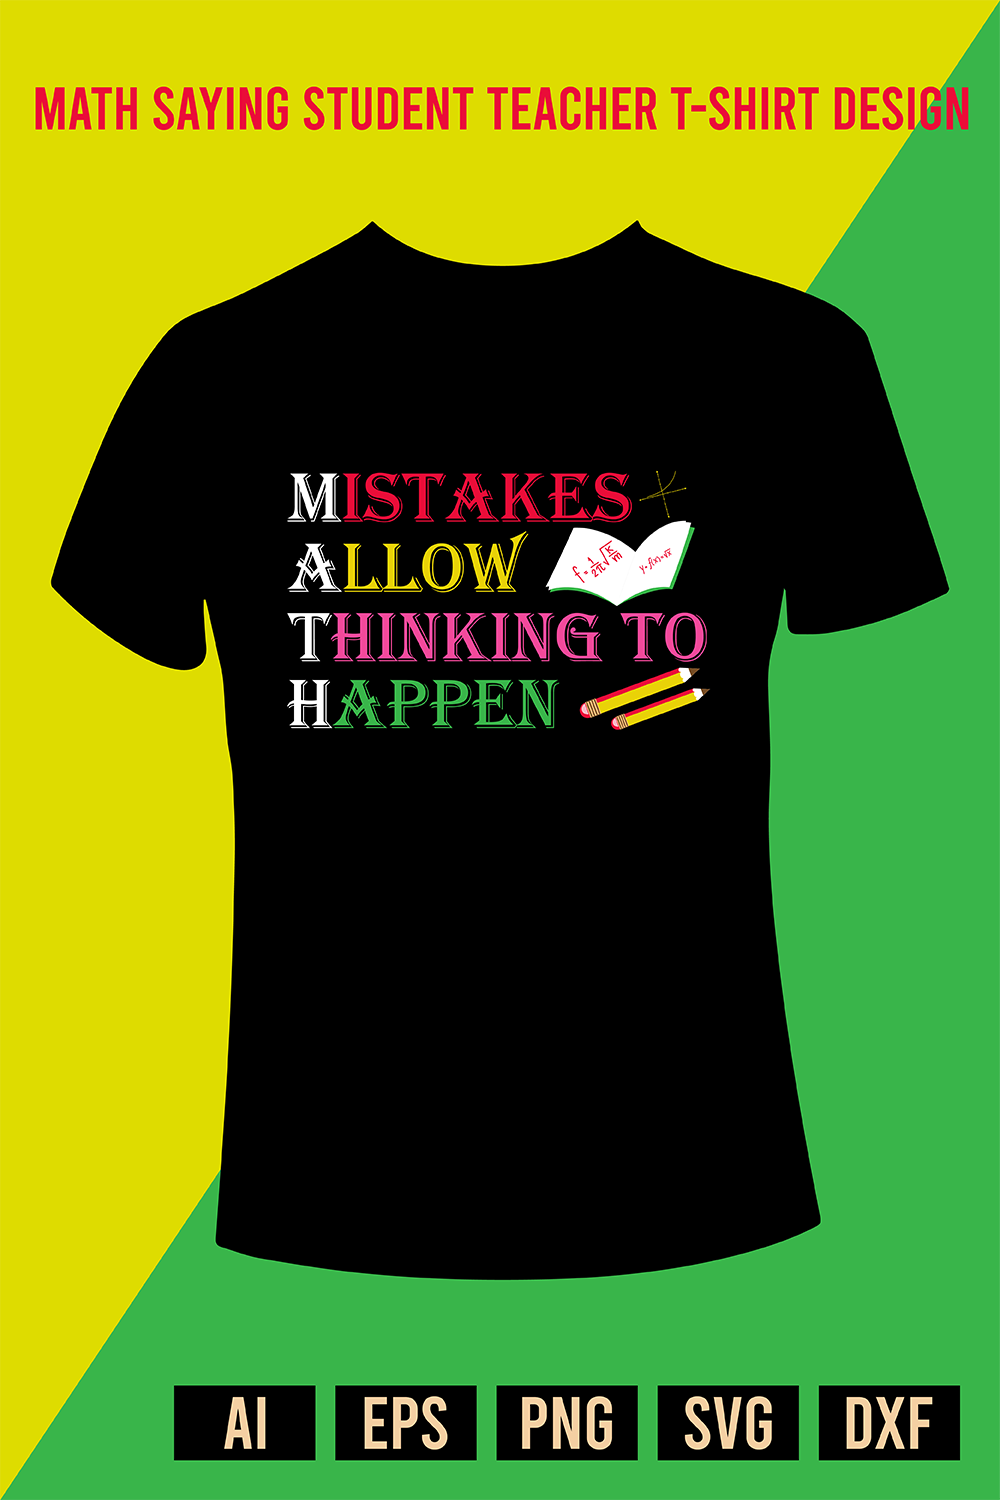 Math Saying Student Teacher T-Shirt Design pinterest image cover file.